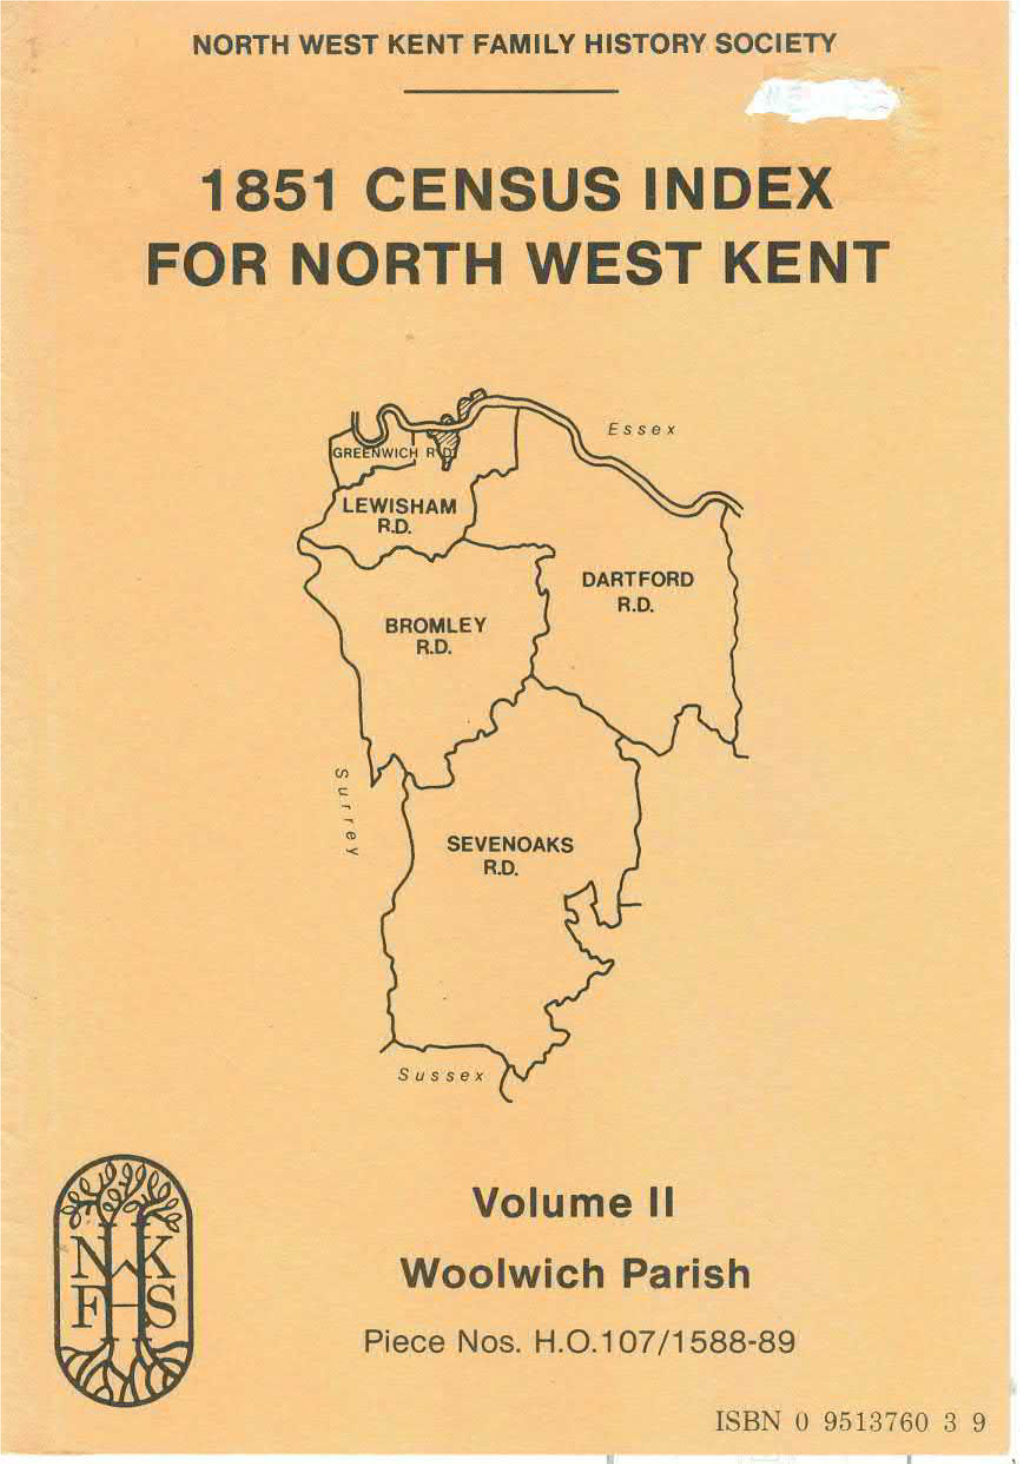 1851 Census Index, for North West Kent